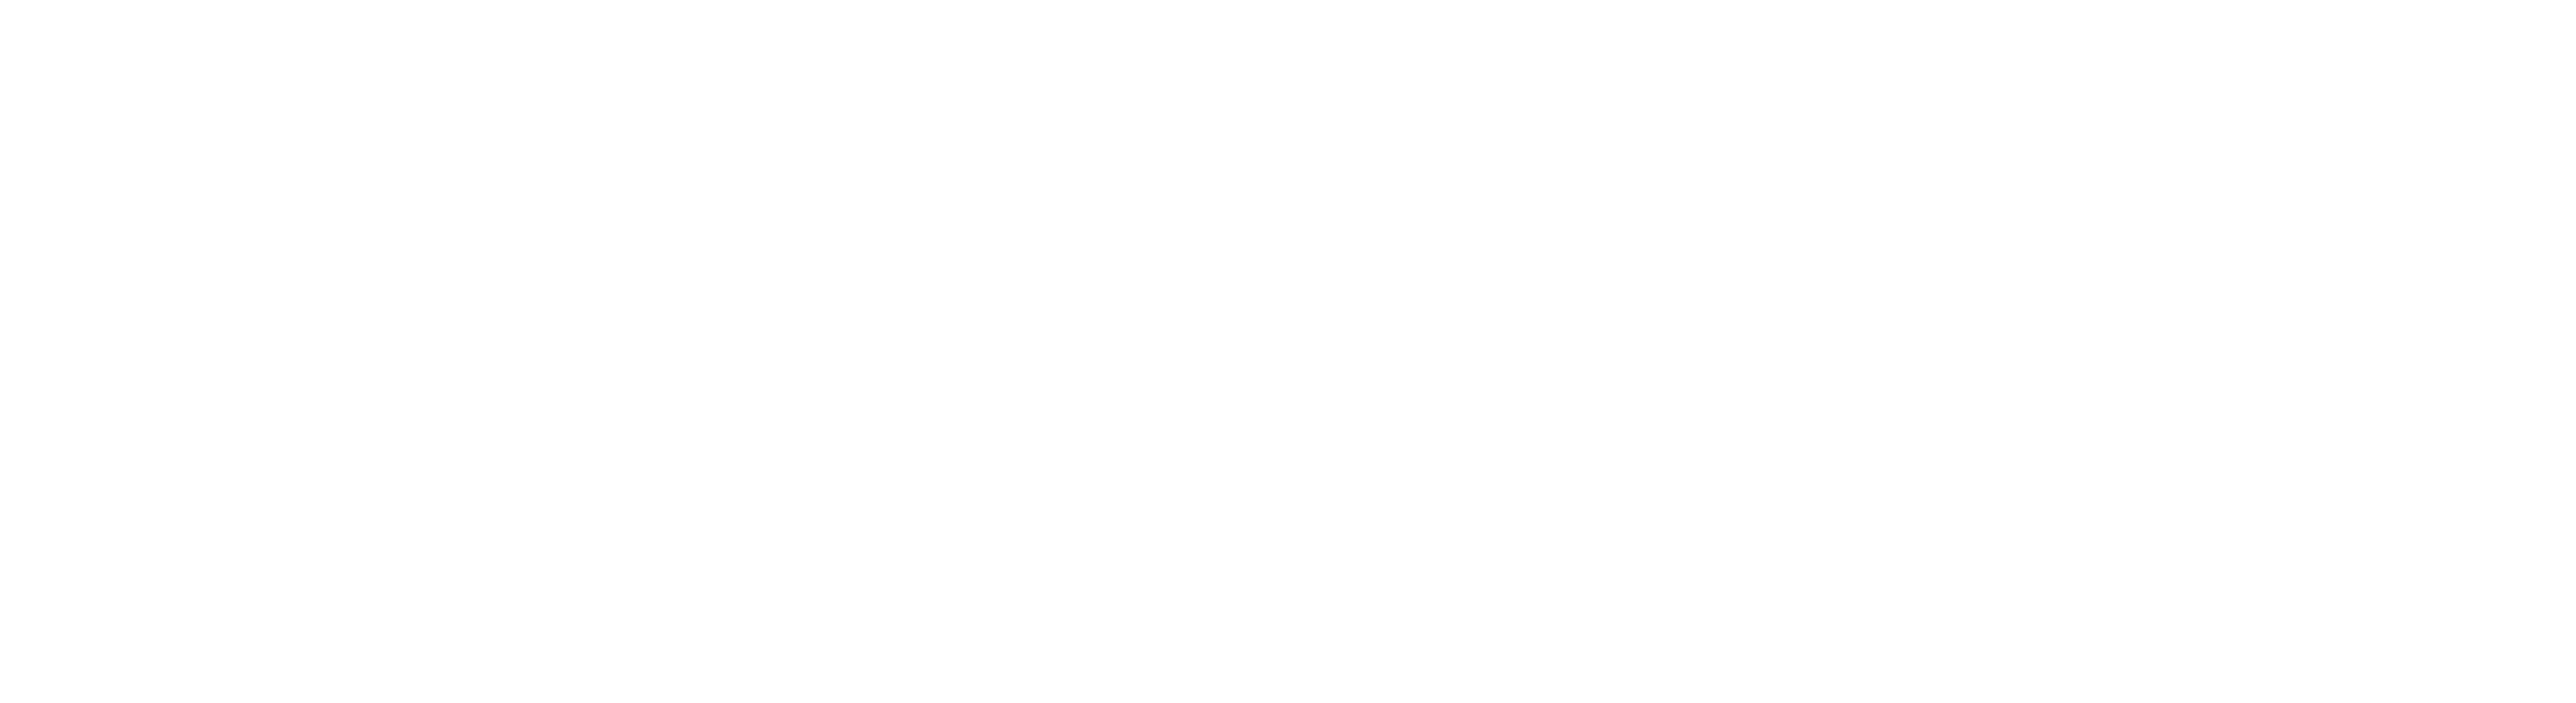 horizons-stewardship-logo_White